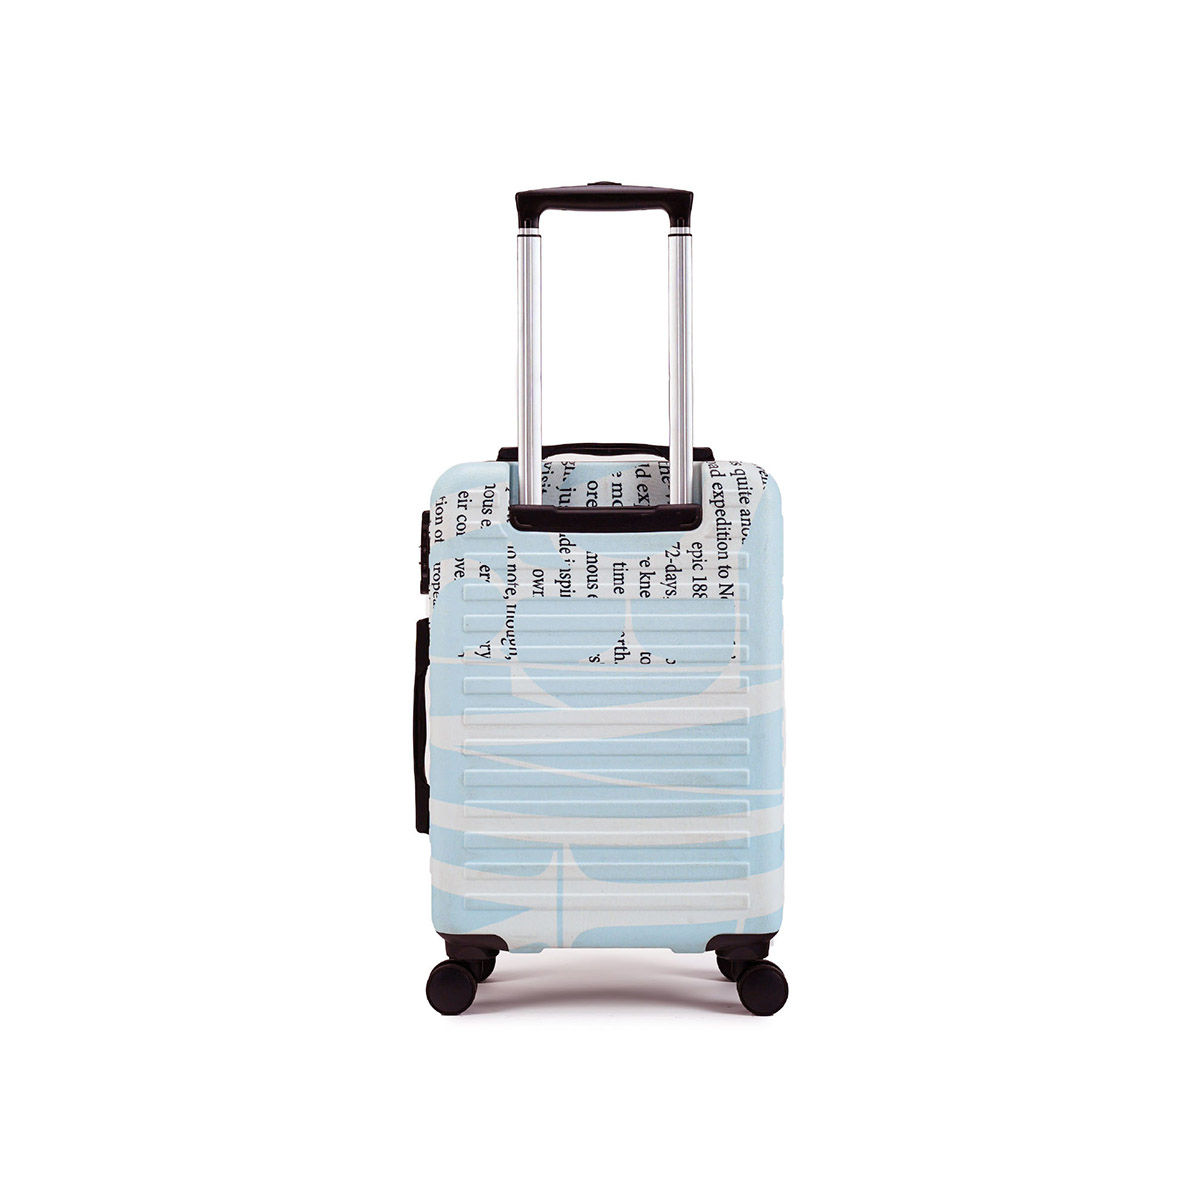 Buy Quality 100 polycarbonate luggage For International Travel - Alibaba.com